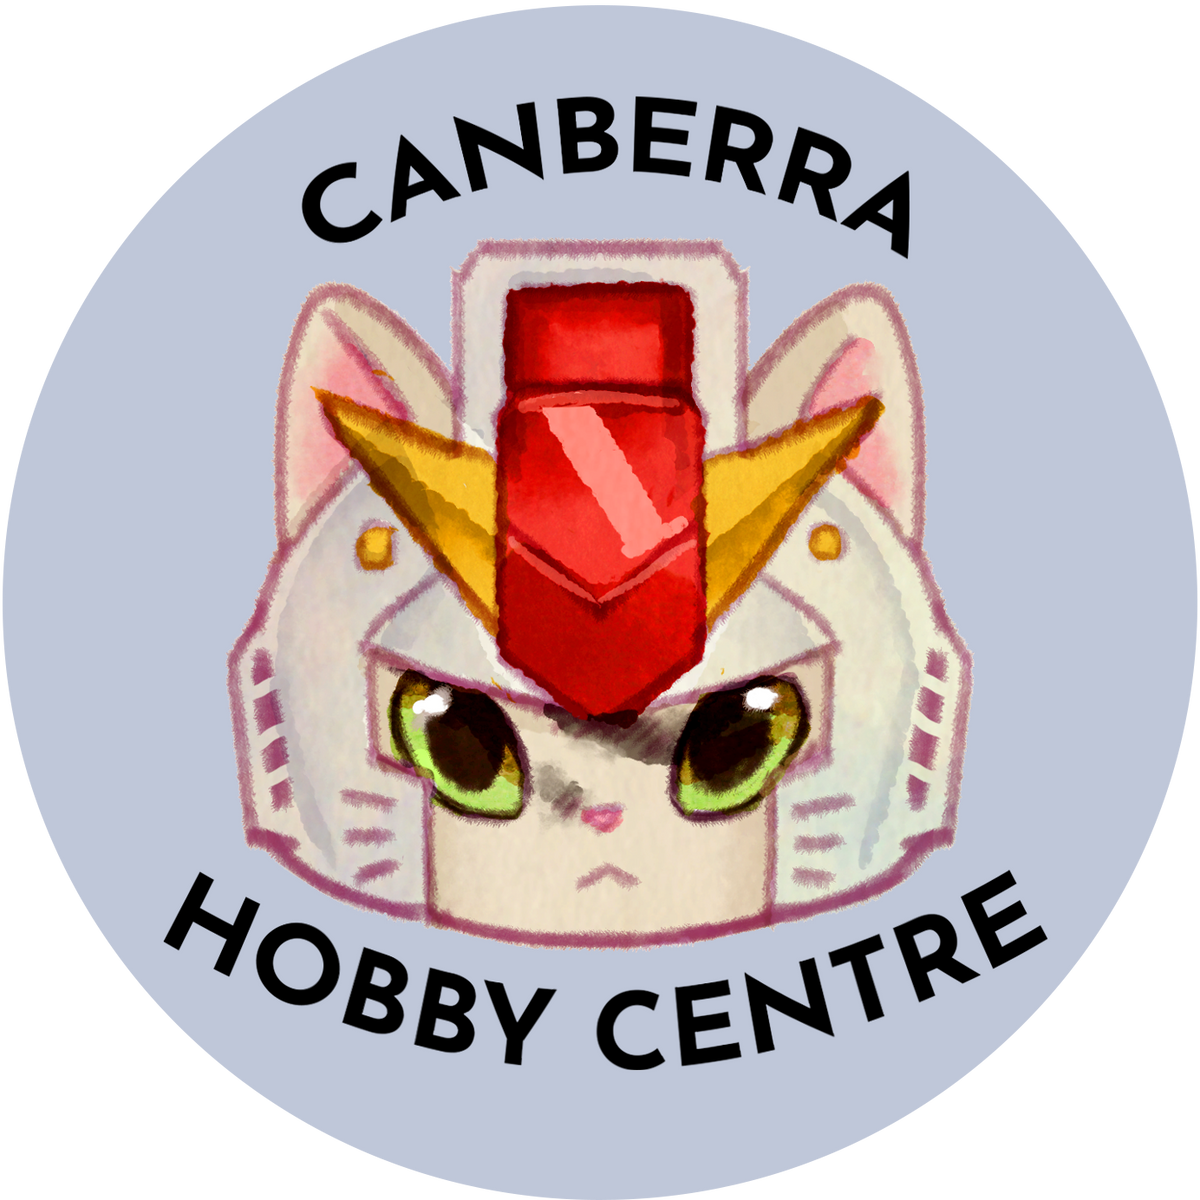 Canberra Hobby Centre